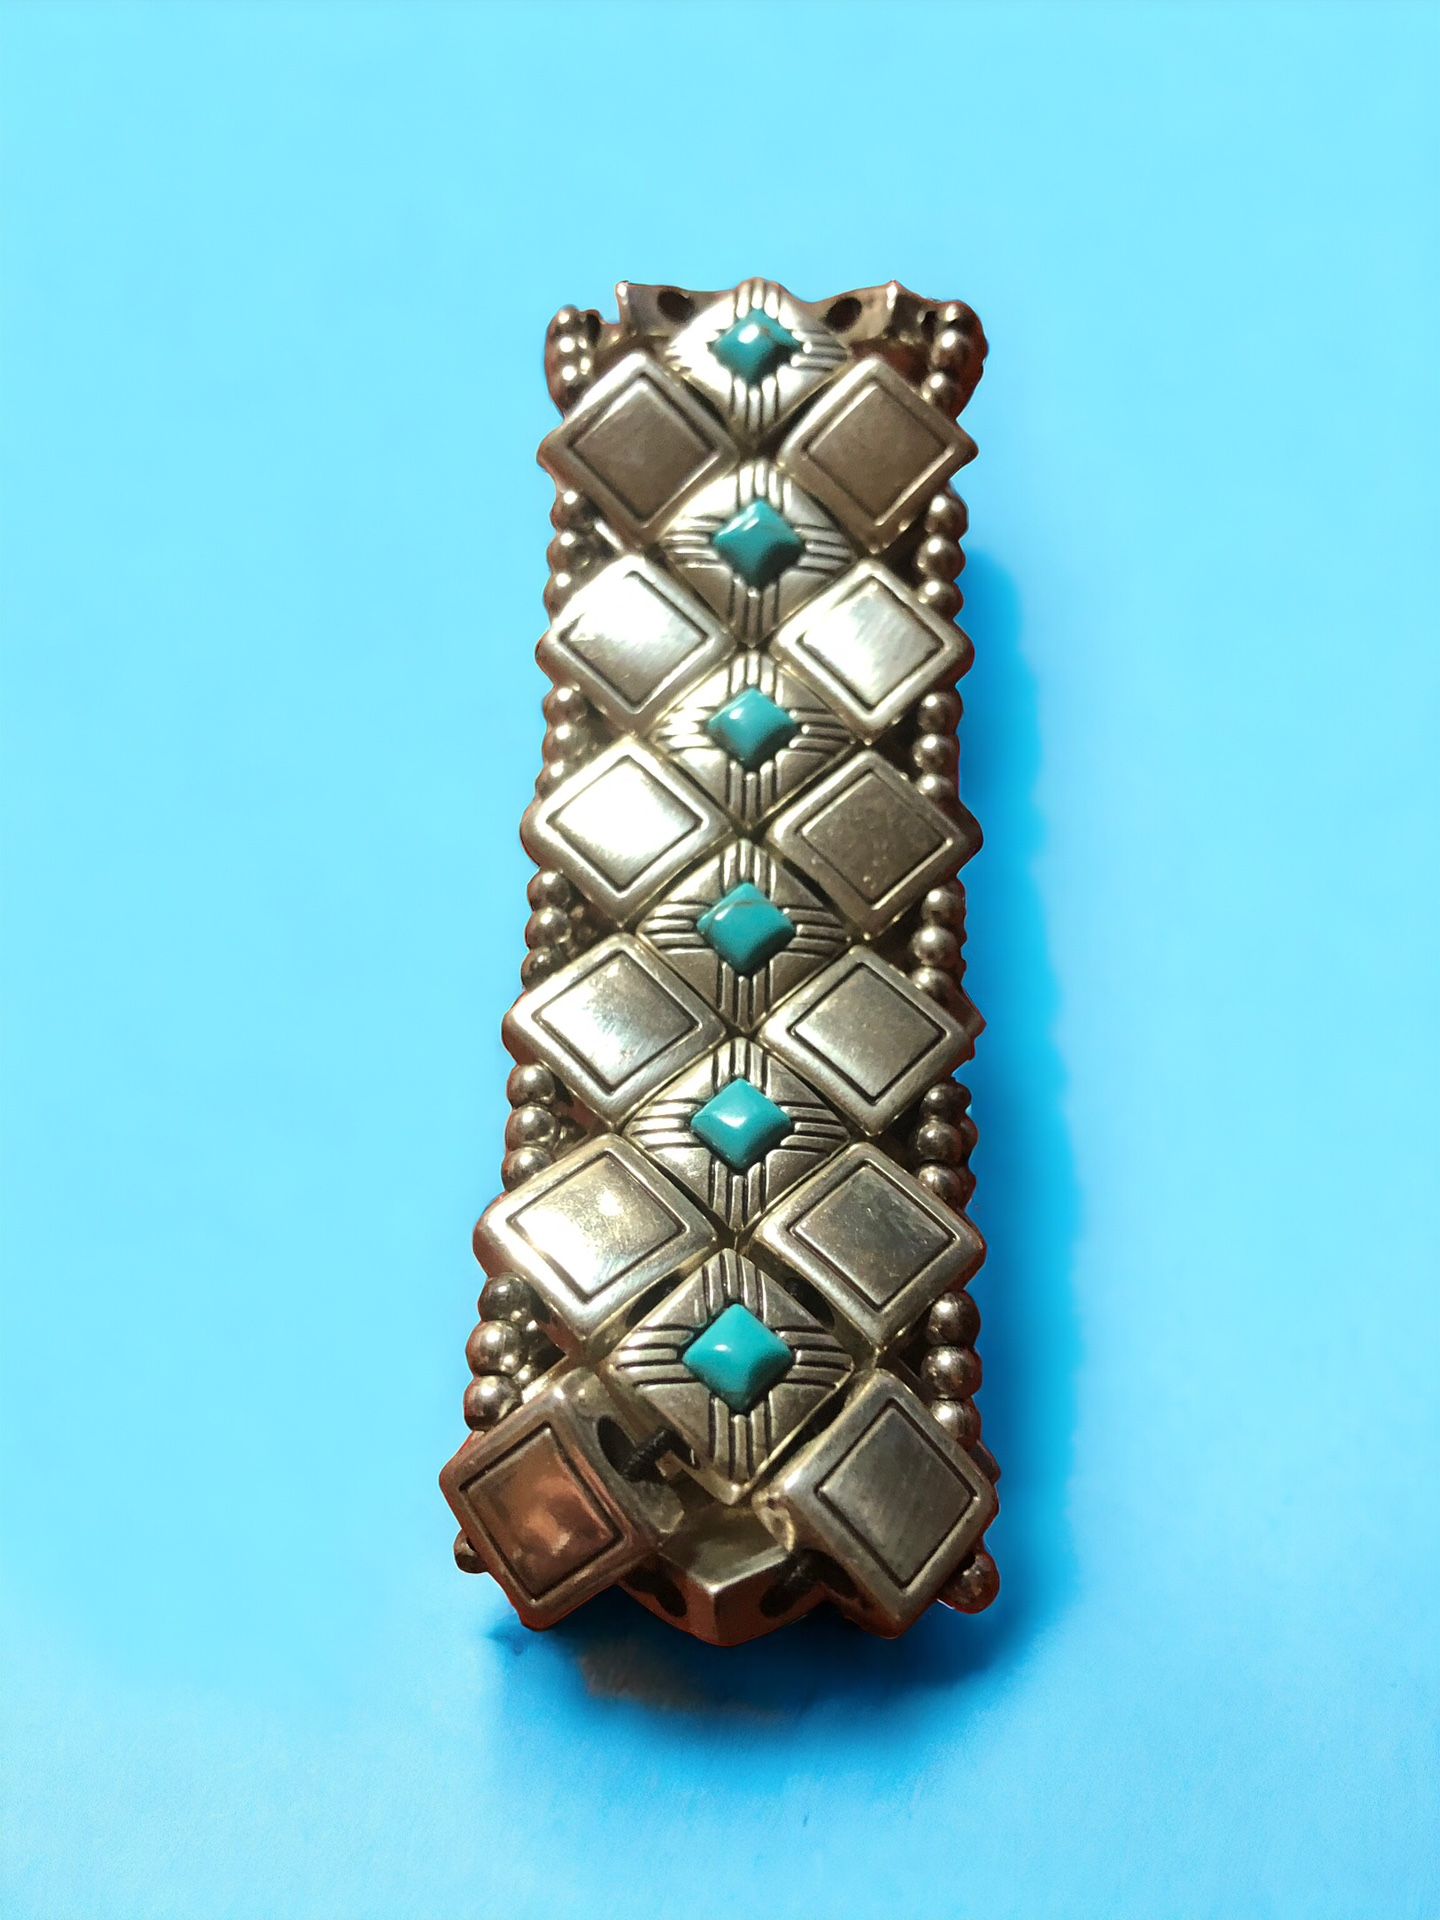 Brighton Stretch Bracelet 6” With Turquoise Stones. Never Worn